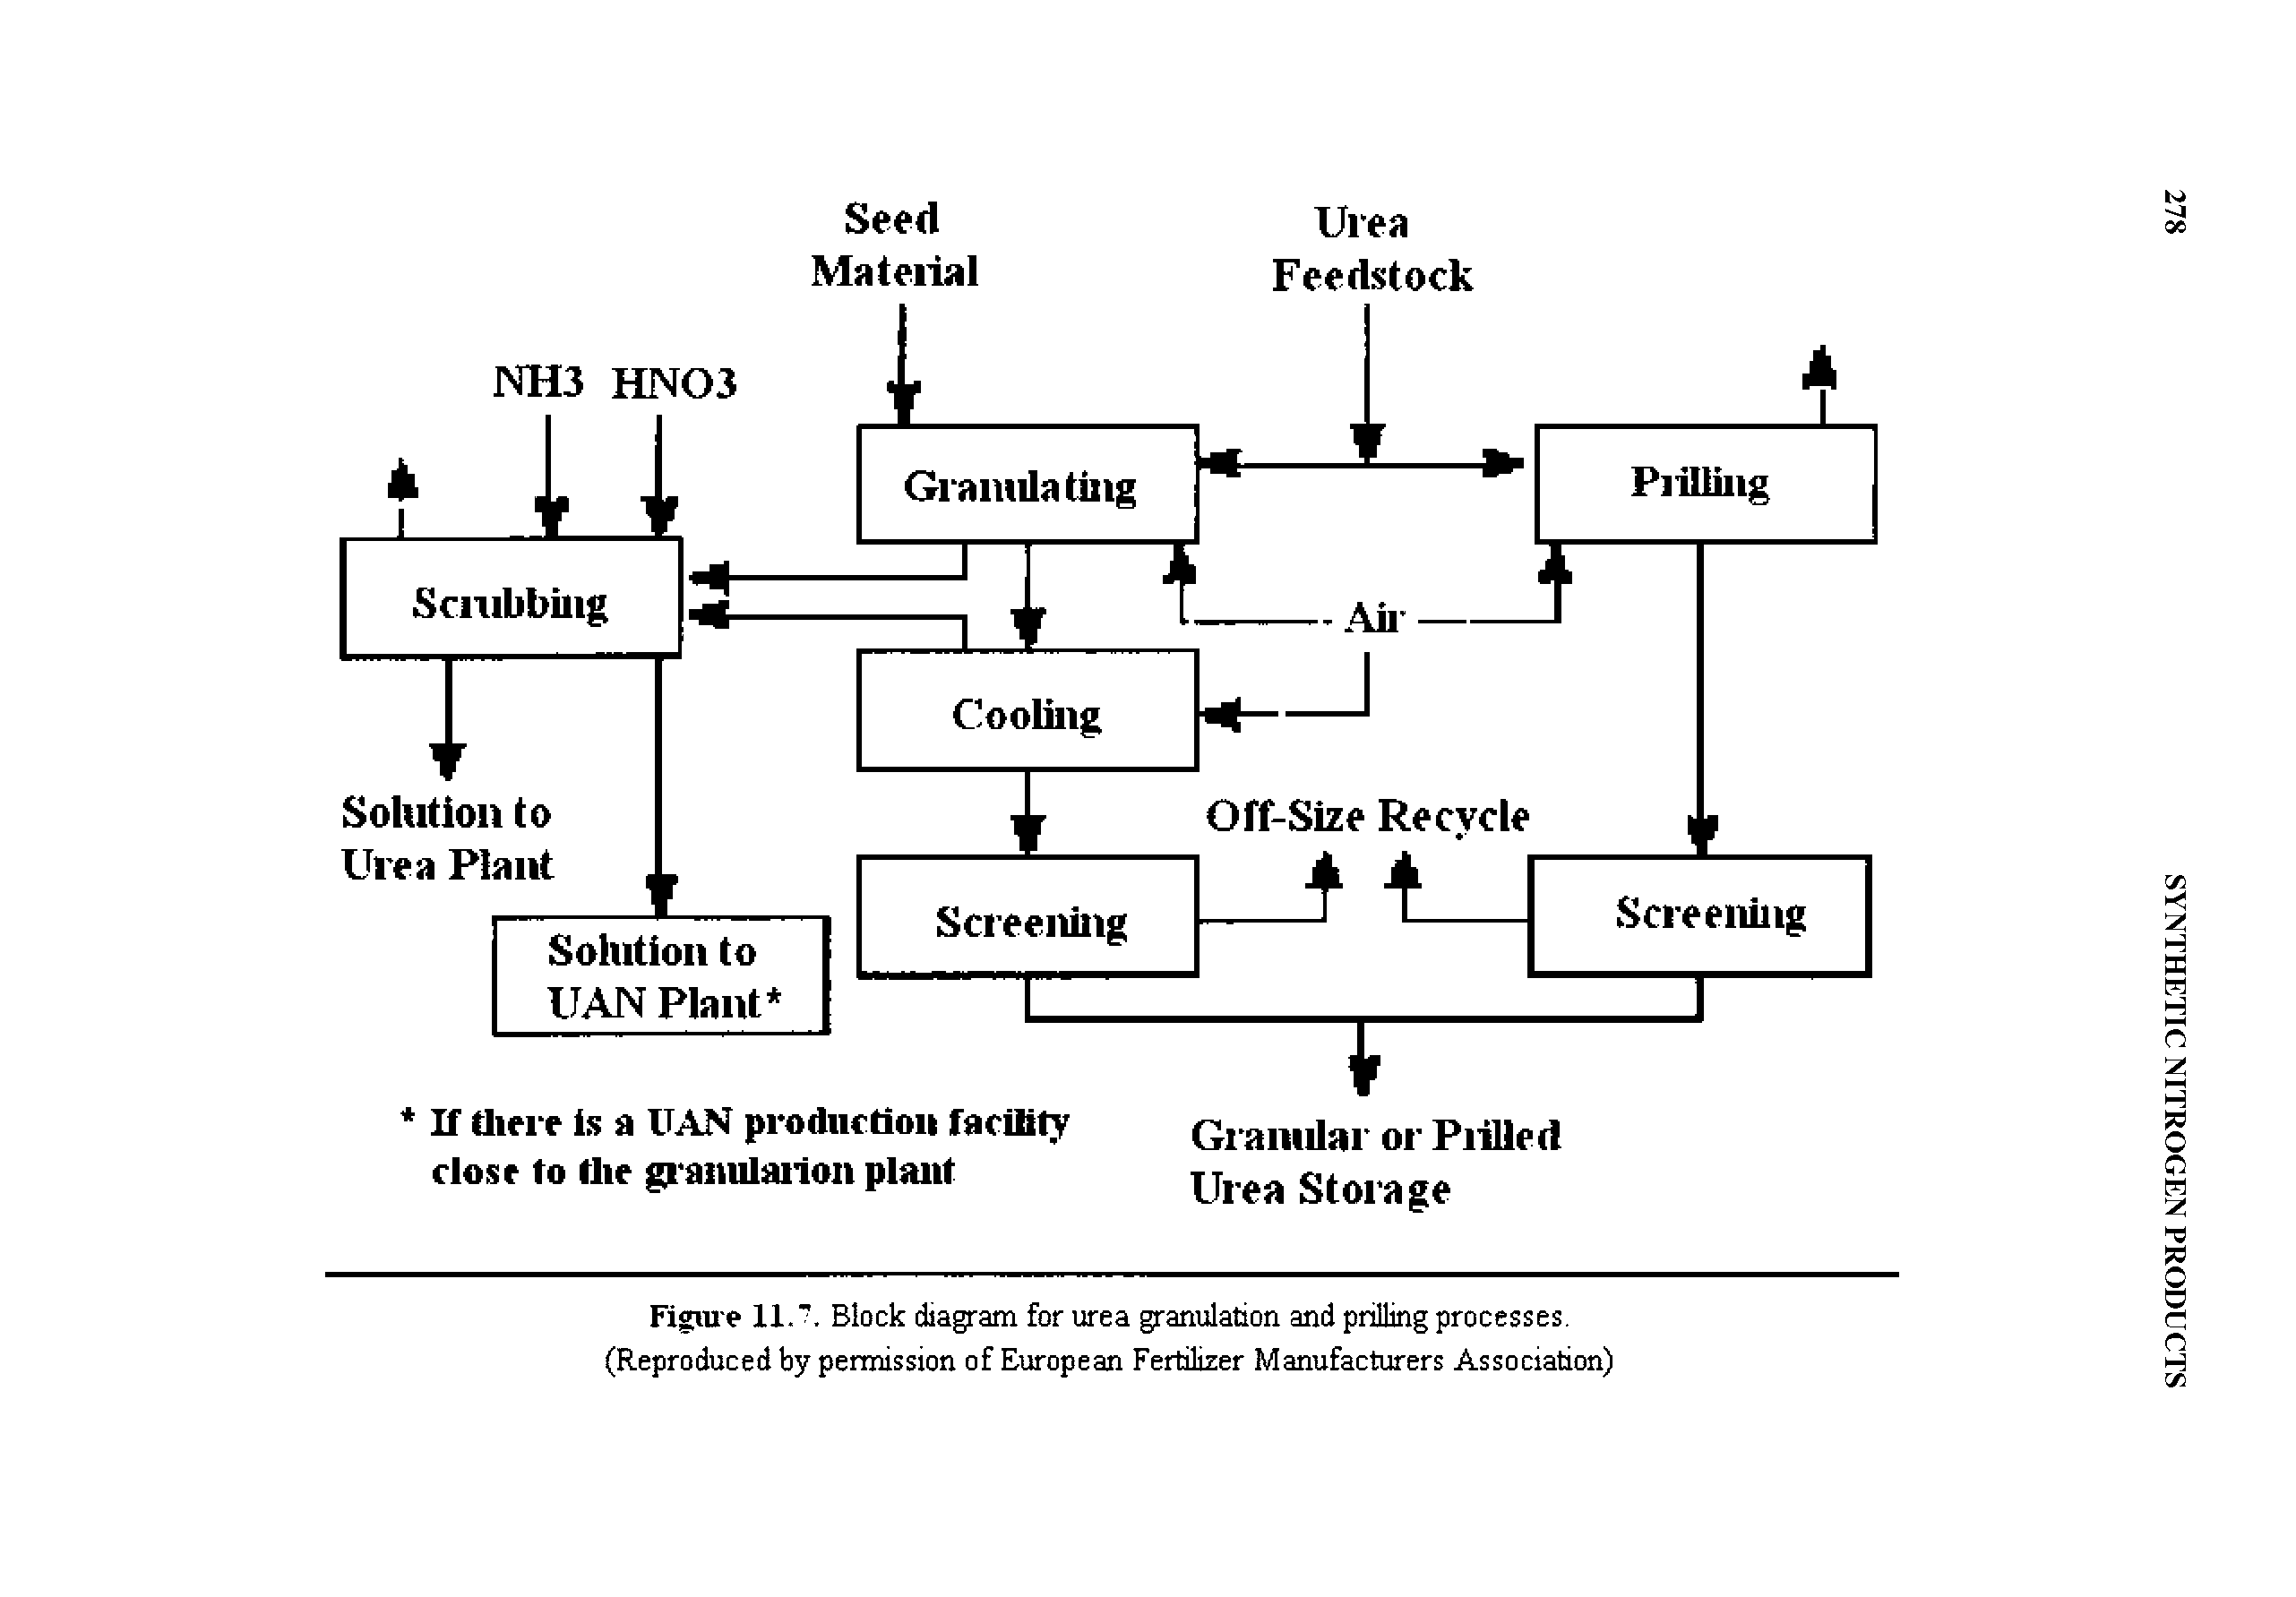 Figure 11.. Block diagram for urea granulation and prilling processes. (Reproduced by permission of European Fertilizer Manufacturers Association)...